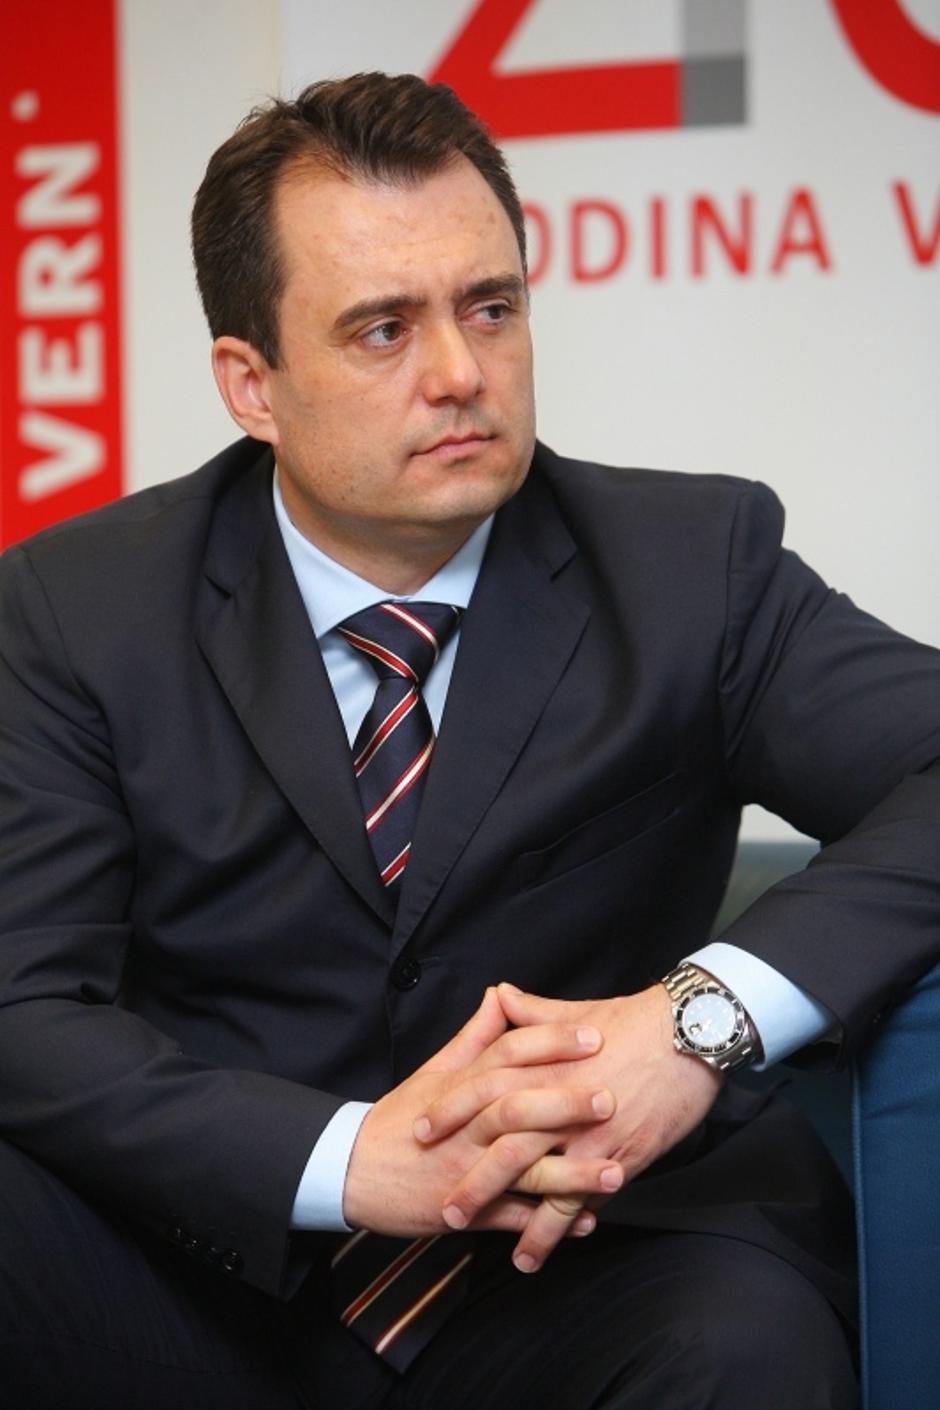 Damir Vanđelić | Author: Tomislav Miletic (PIXSELL)